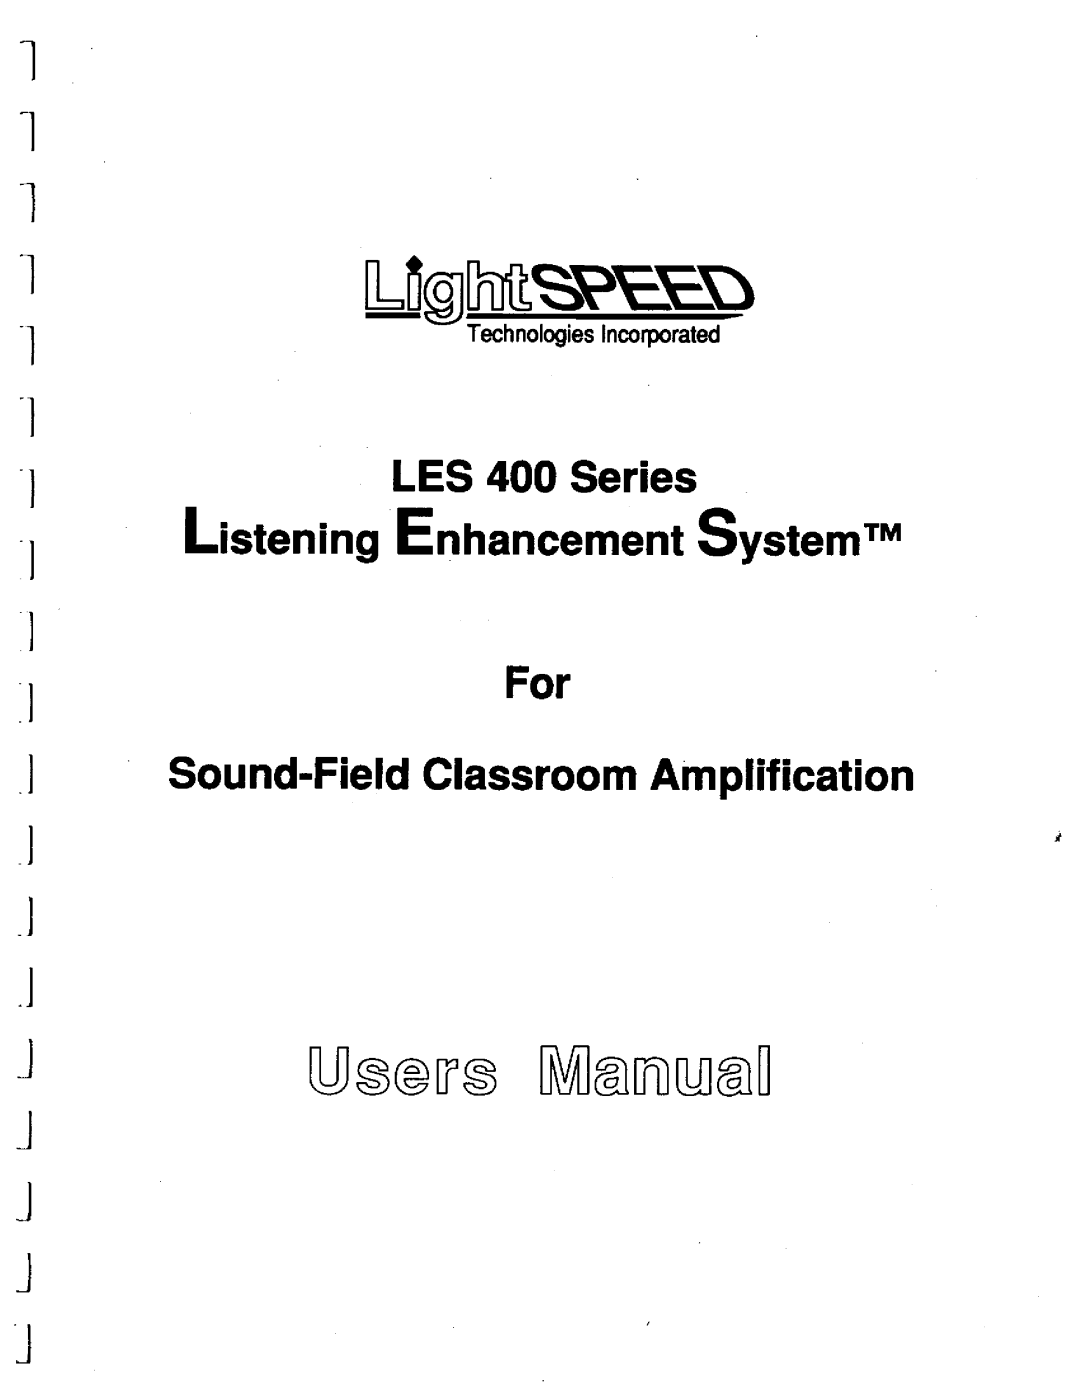 LightSpeed Technologies LES 400 Series manual 